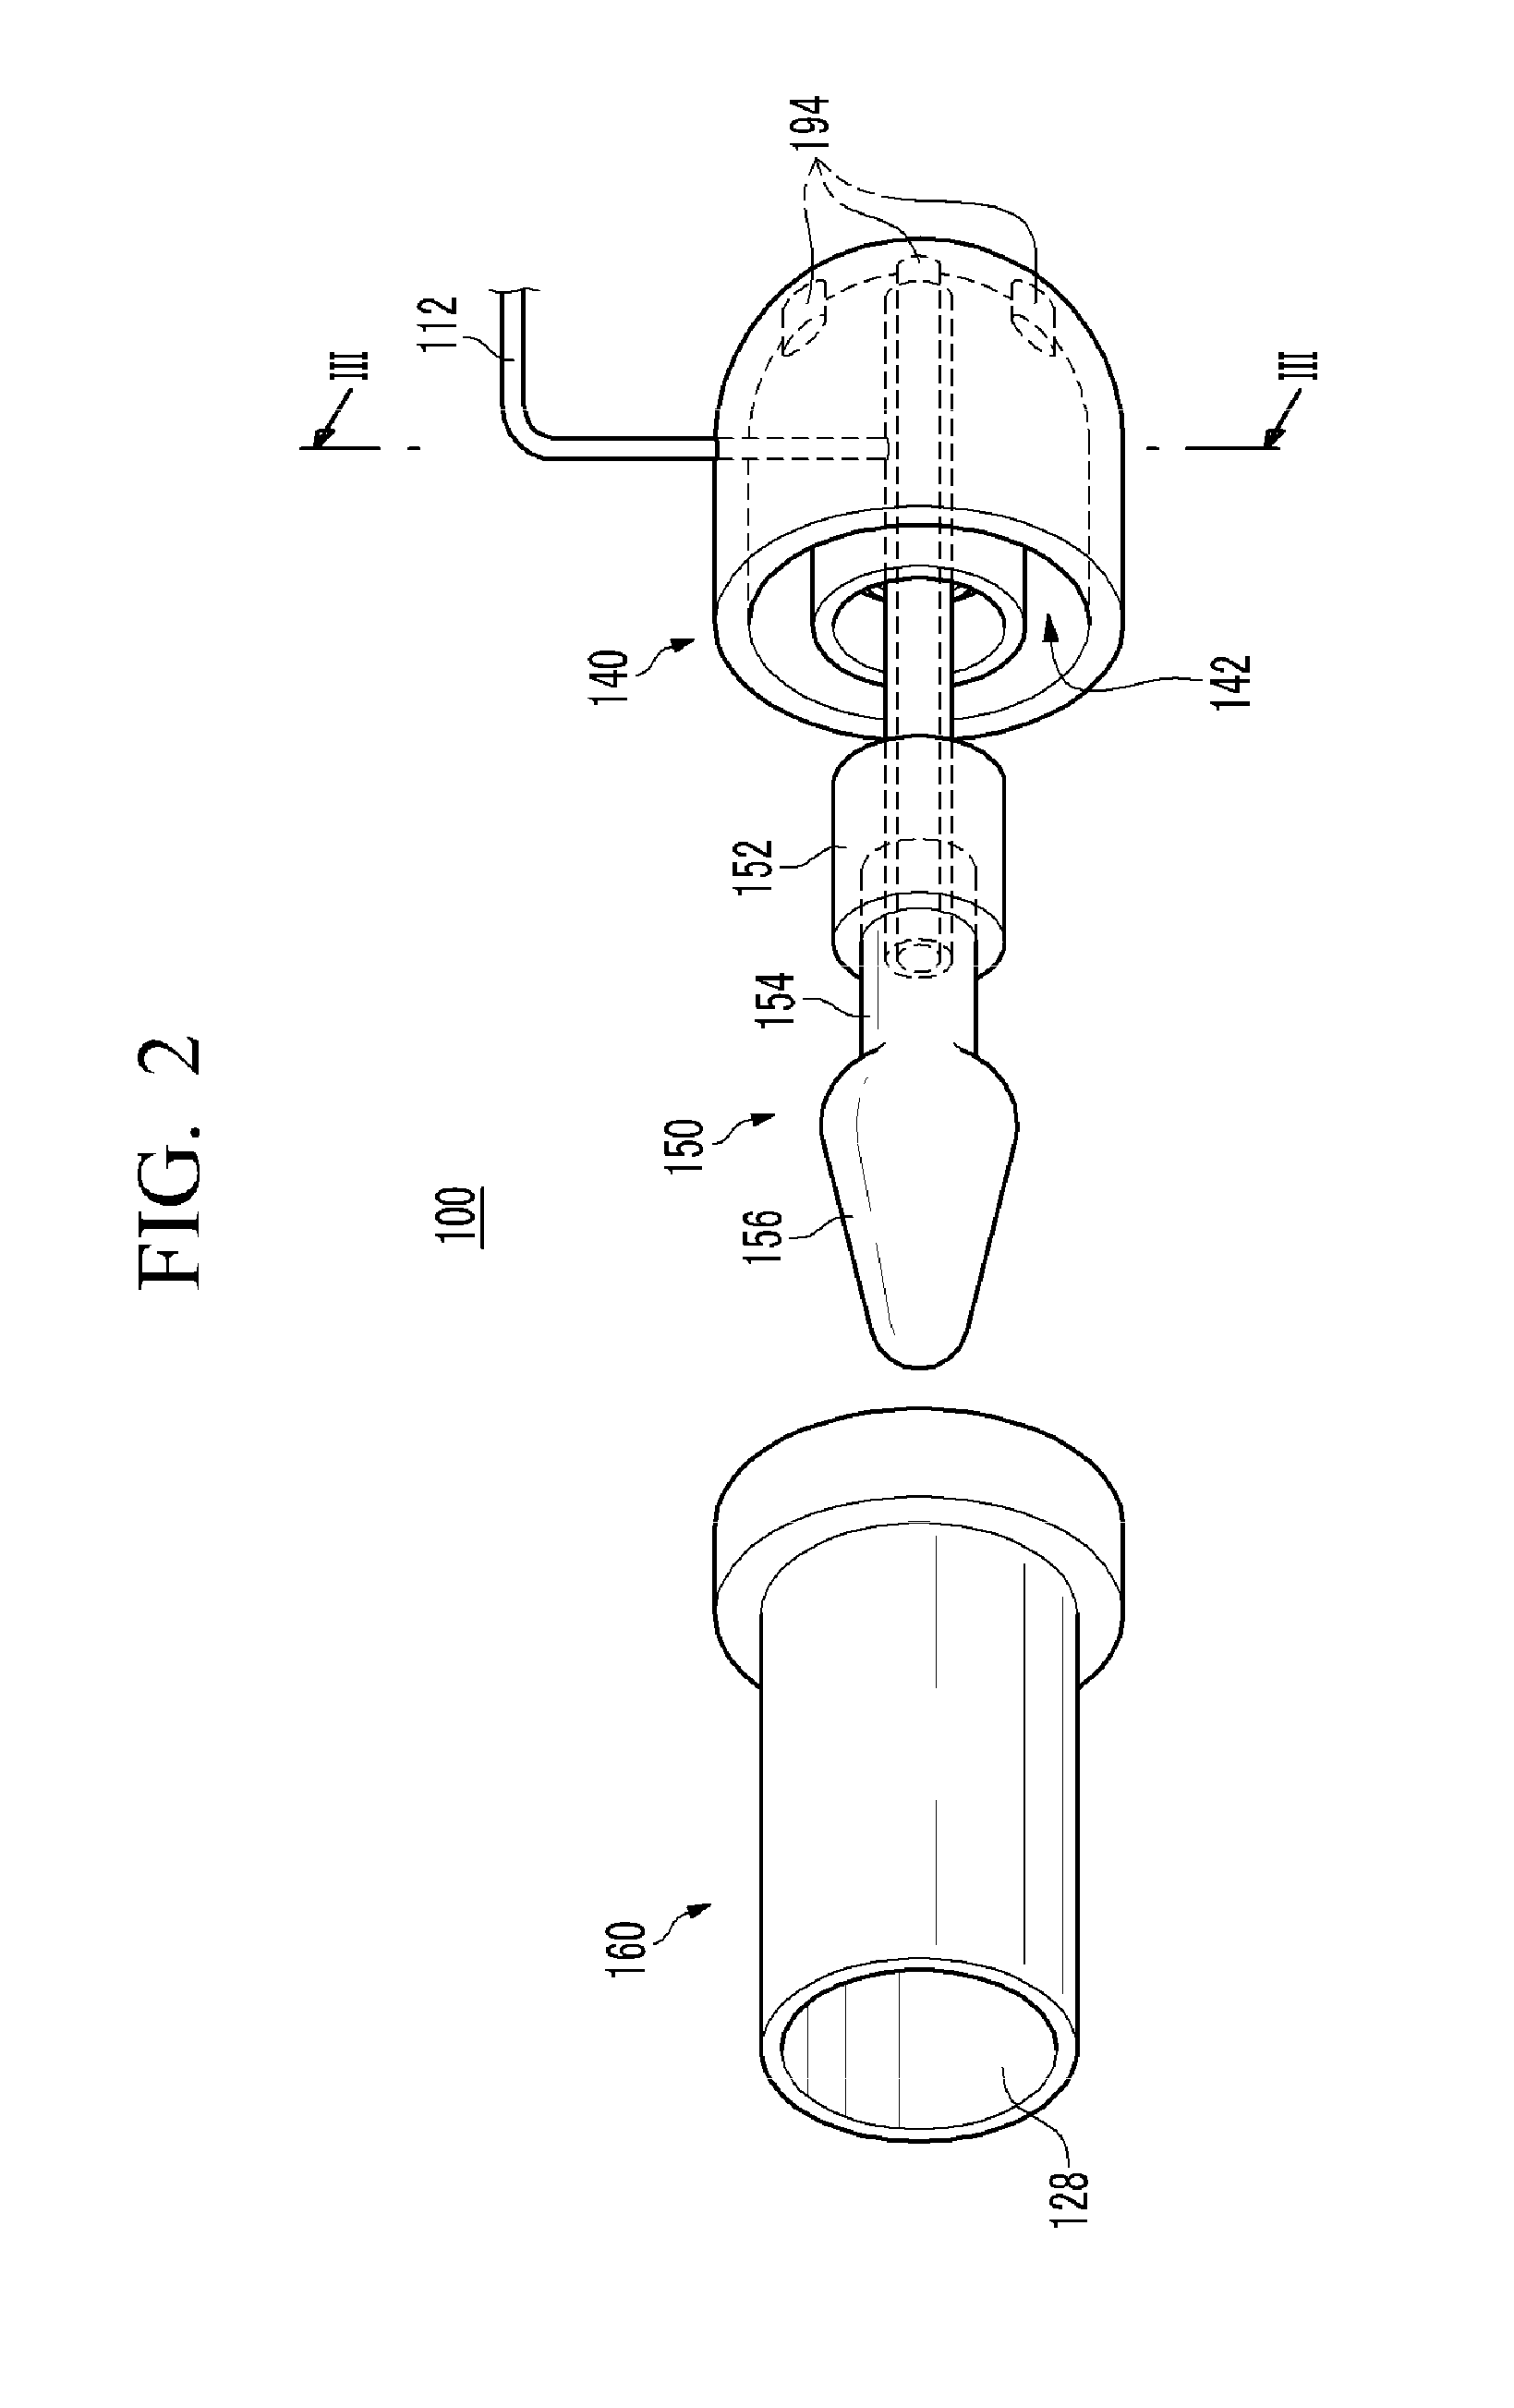 Plasma burner and diesel particulate filter trap